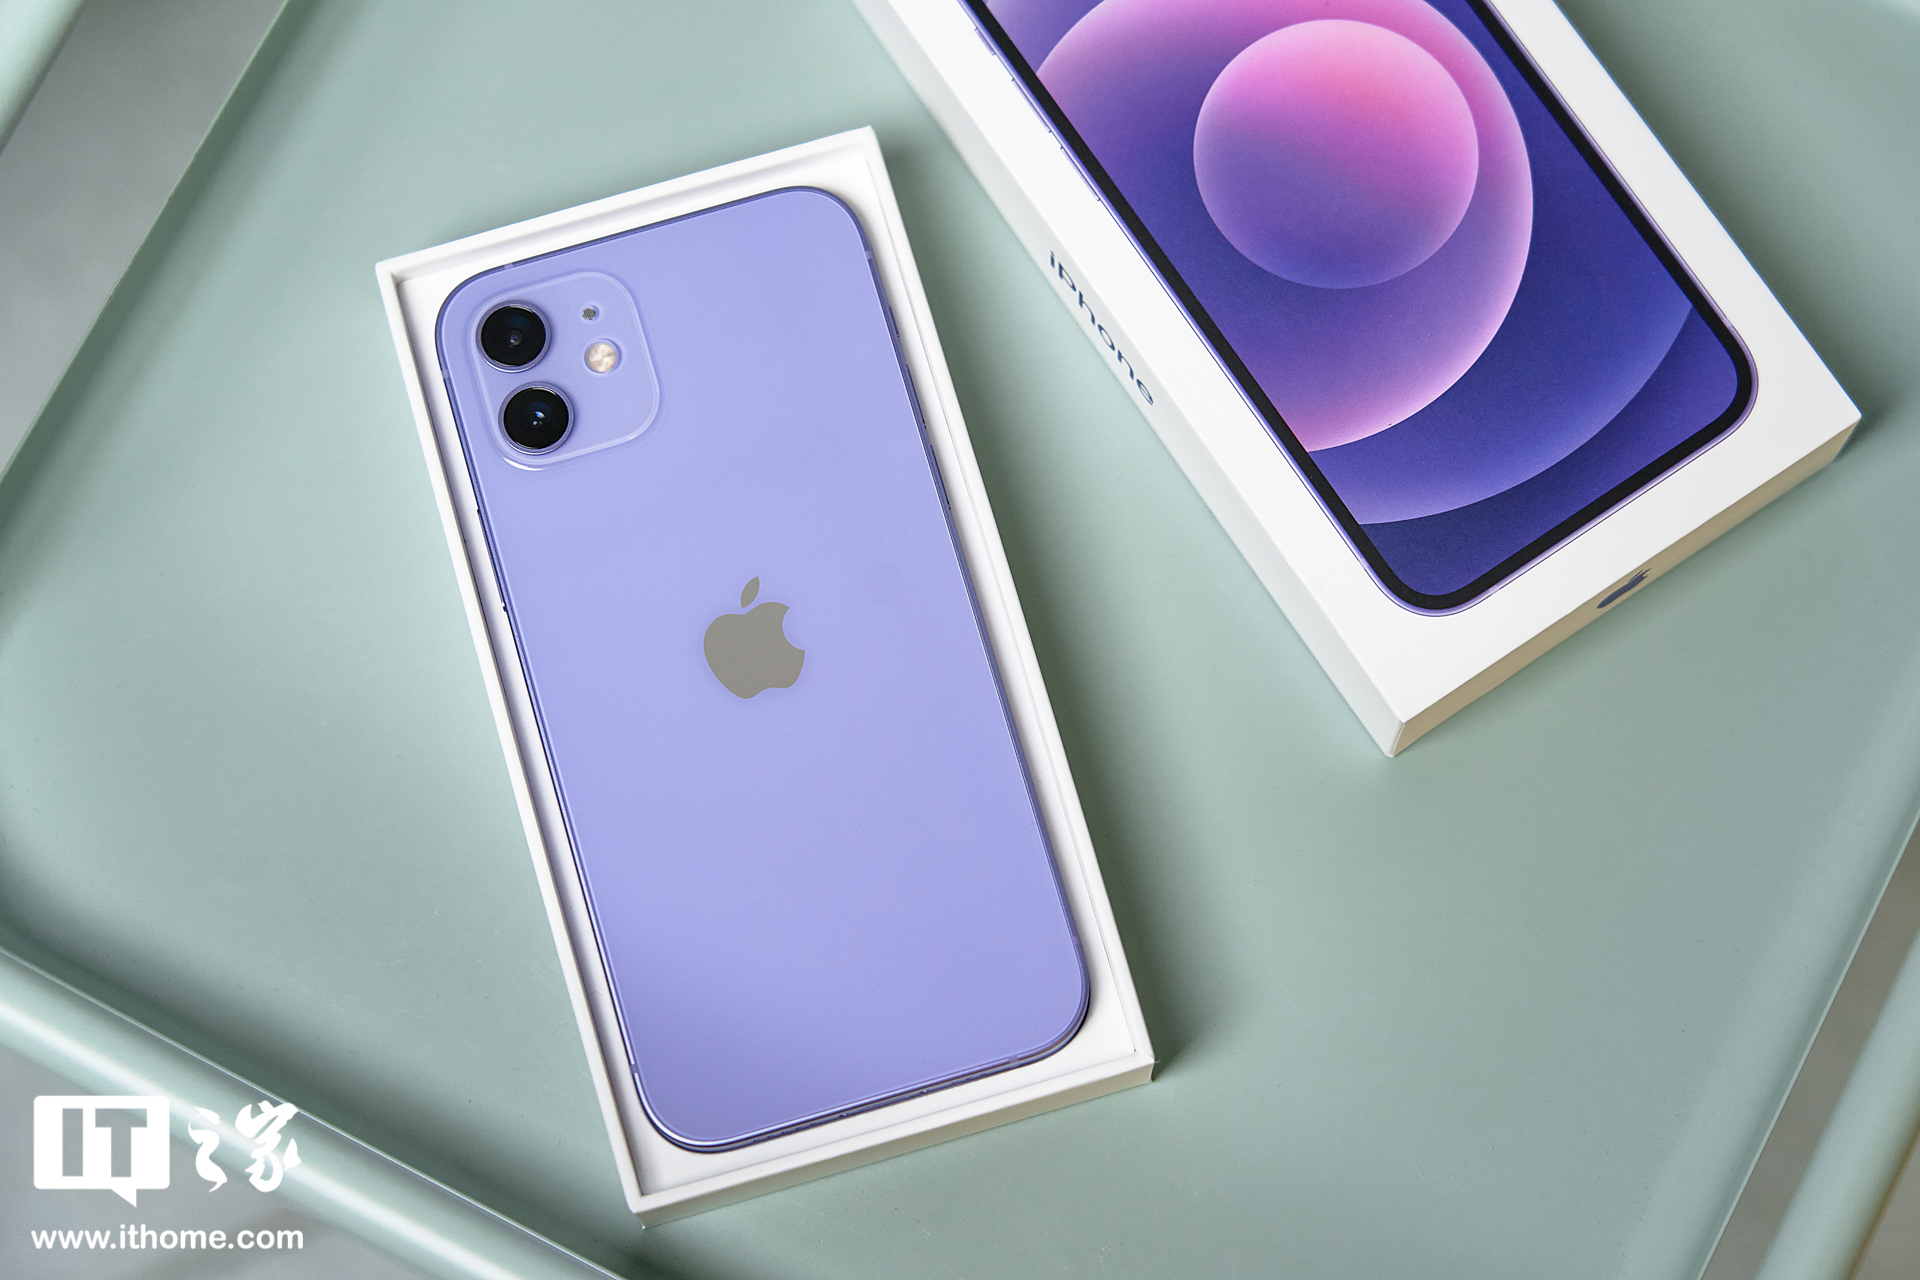 【it之家开箱】紫色苹果 iphone 12 图赏:就像春天里的丁香花